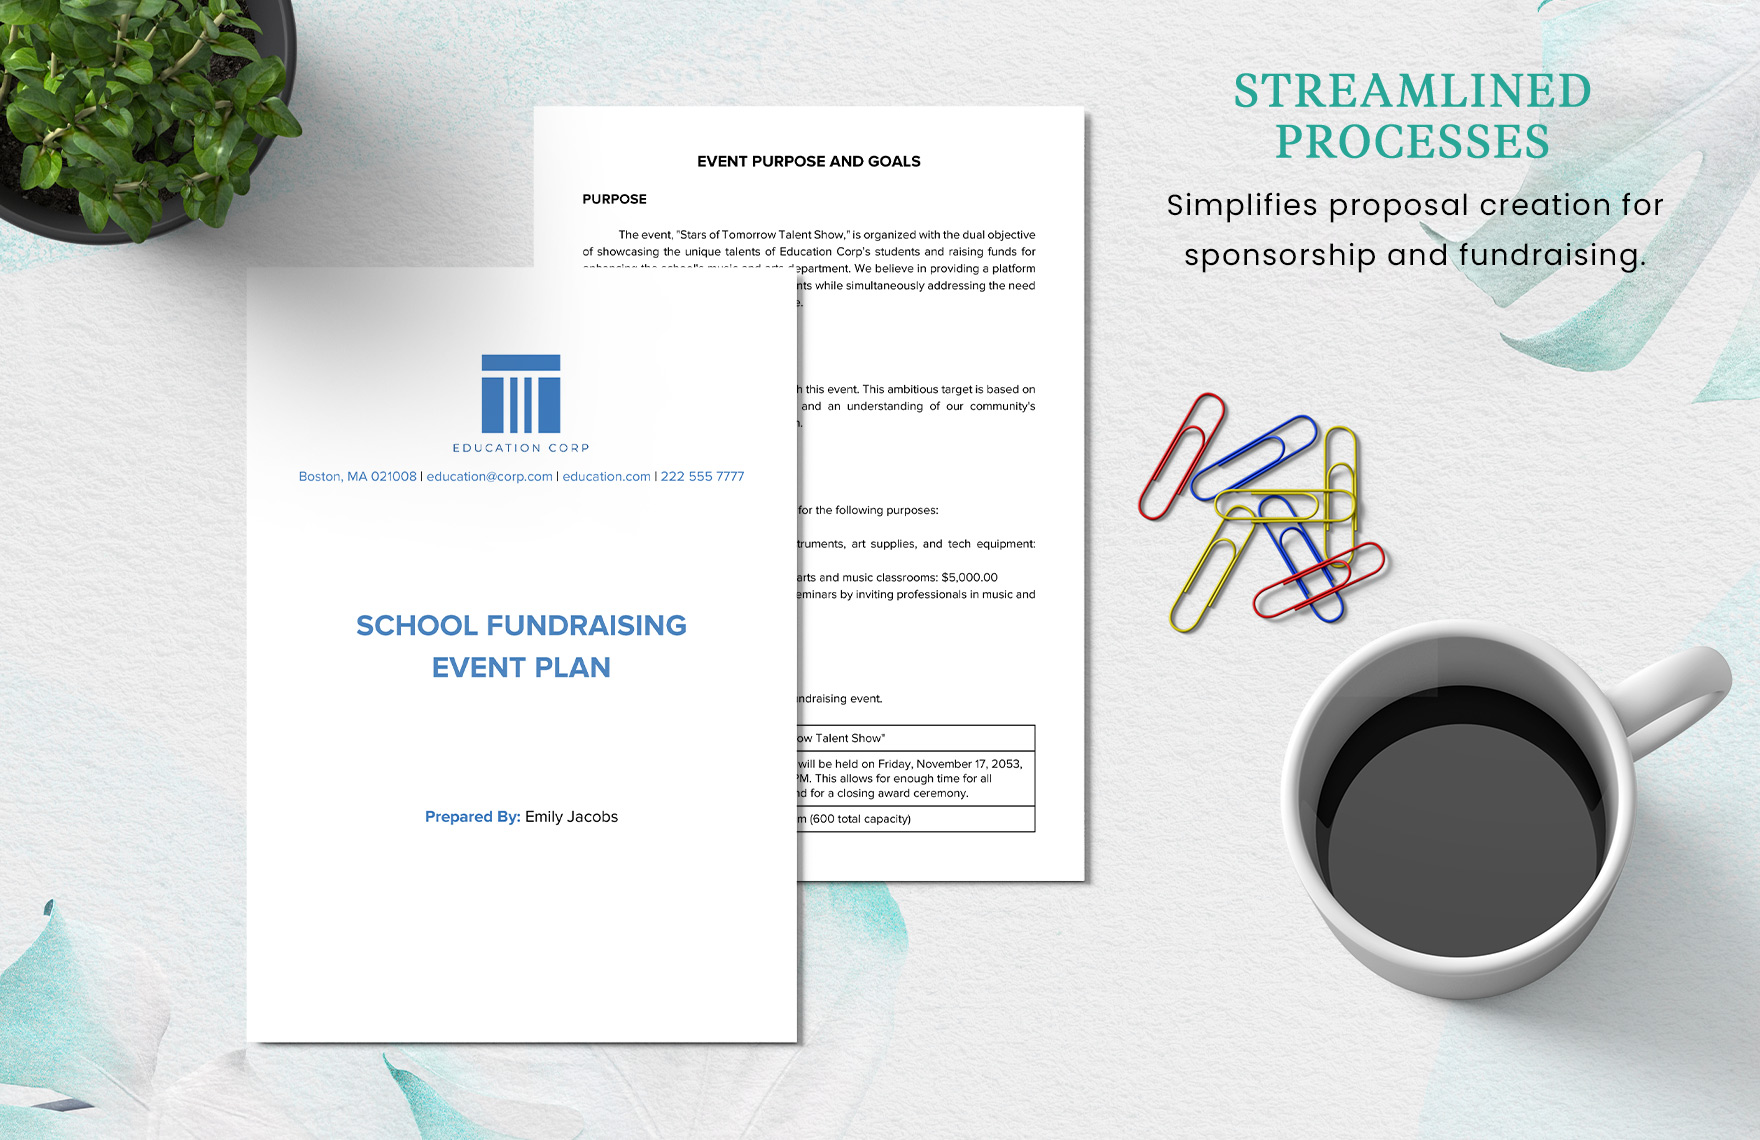 School Fundraising Event Plan Template